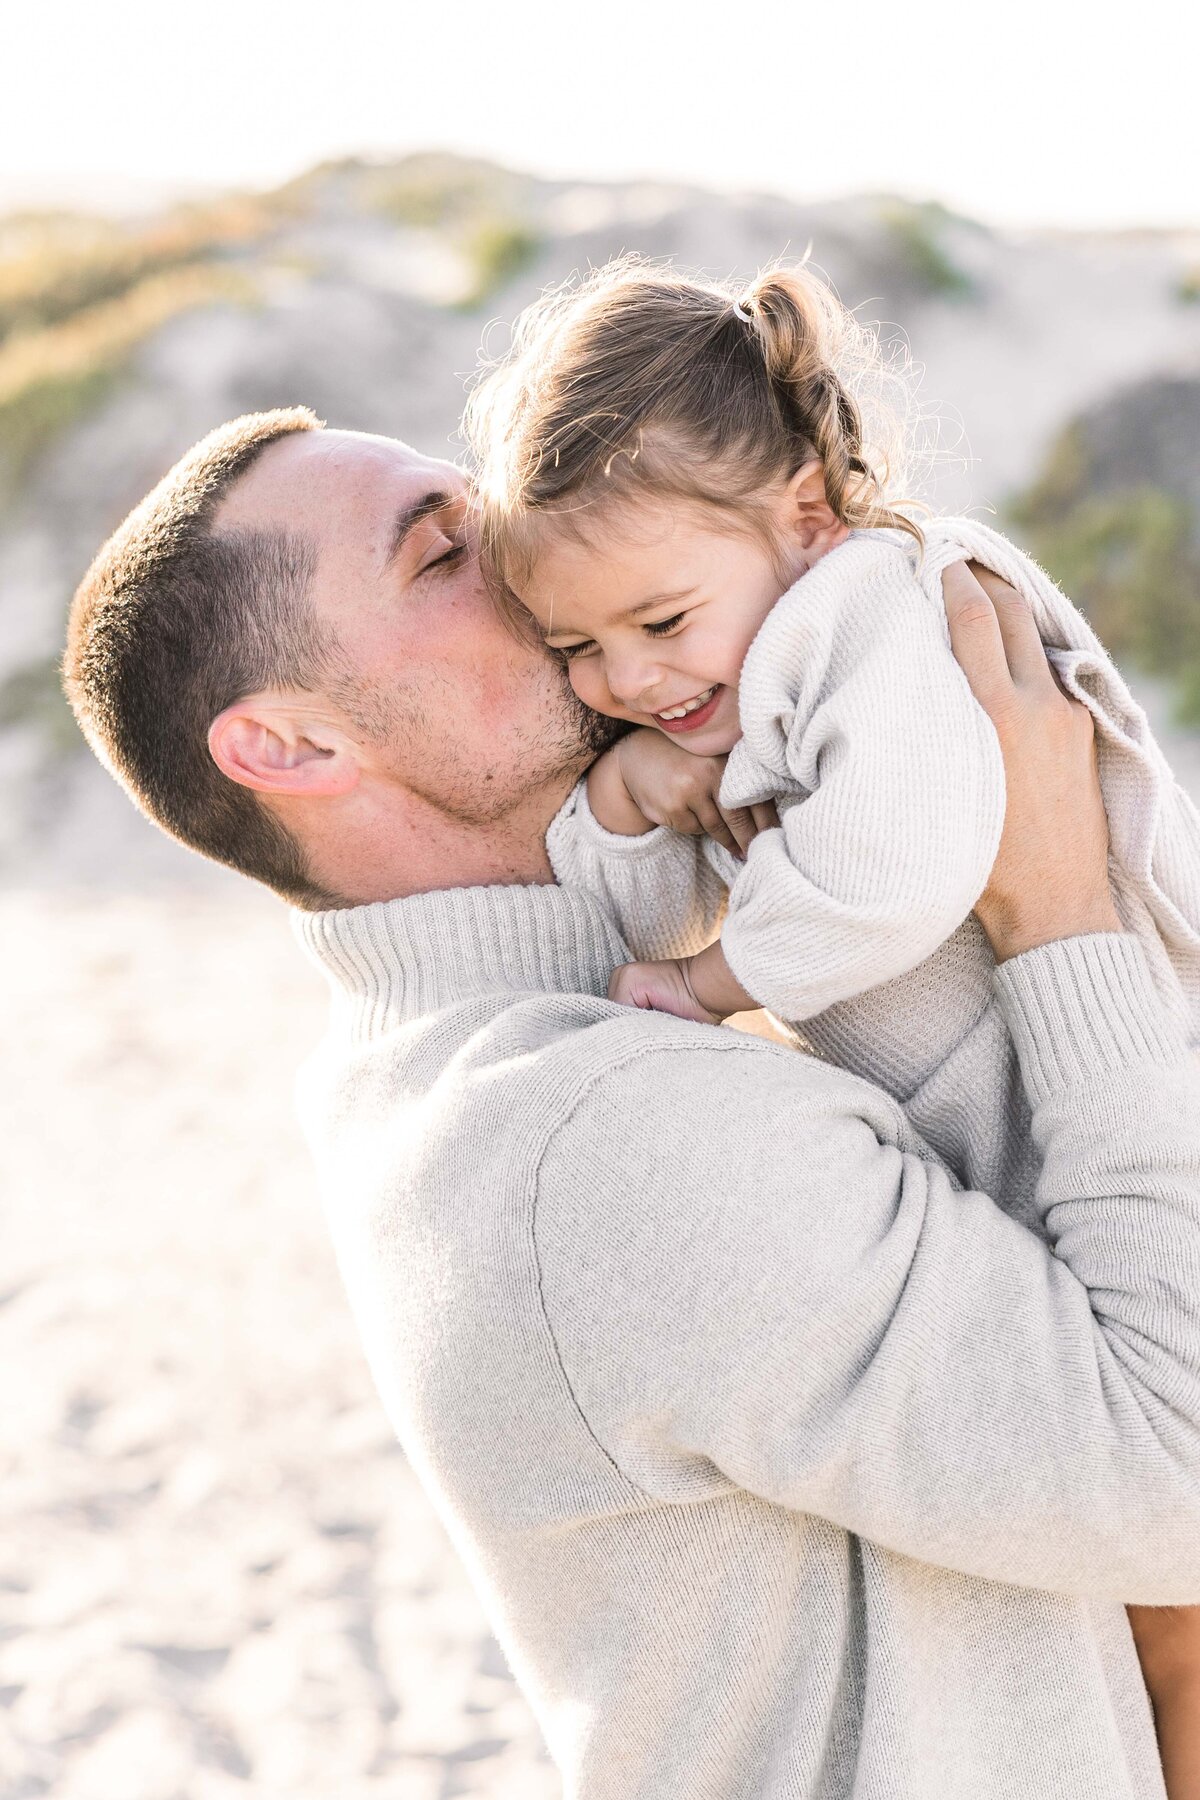 Coronado-beach-san-diego-family-photography-father-kissing-daughter